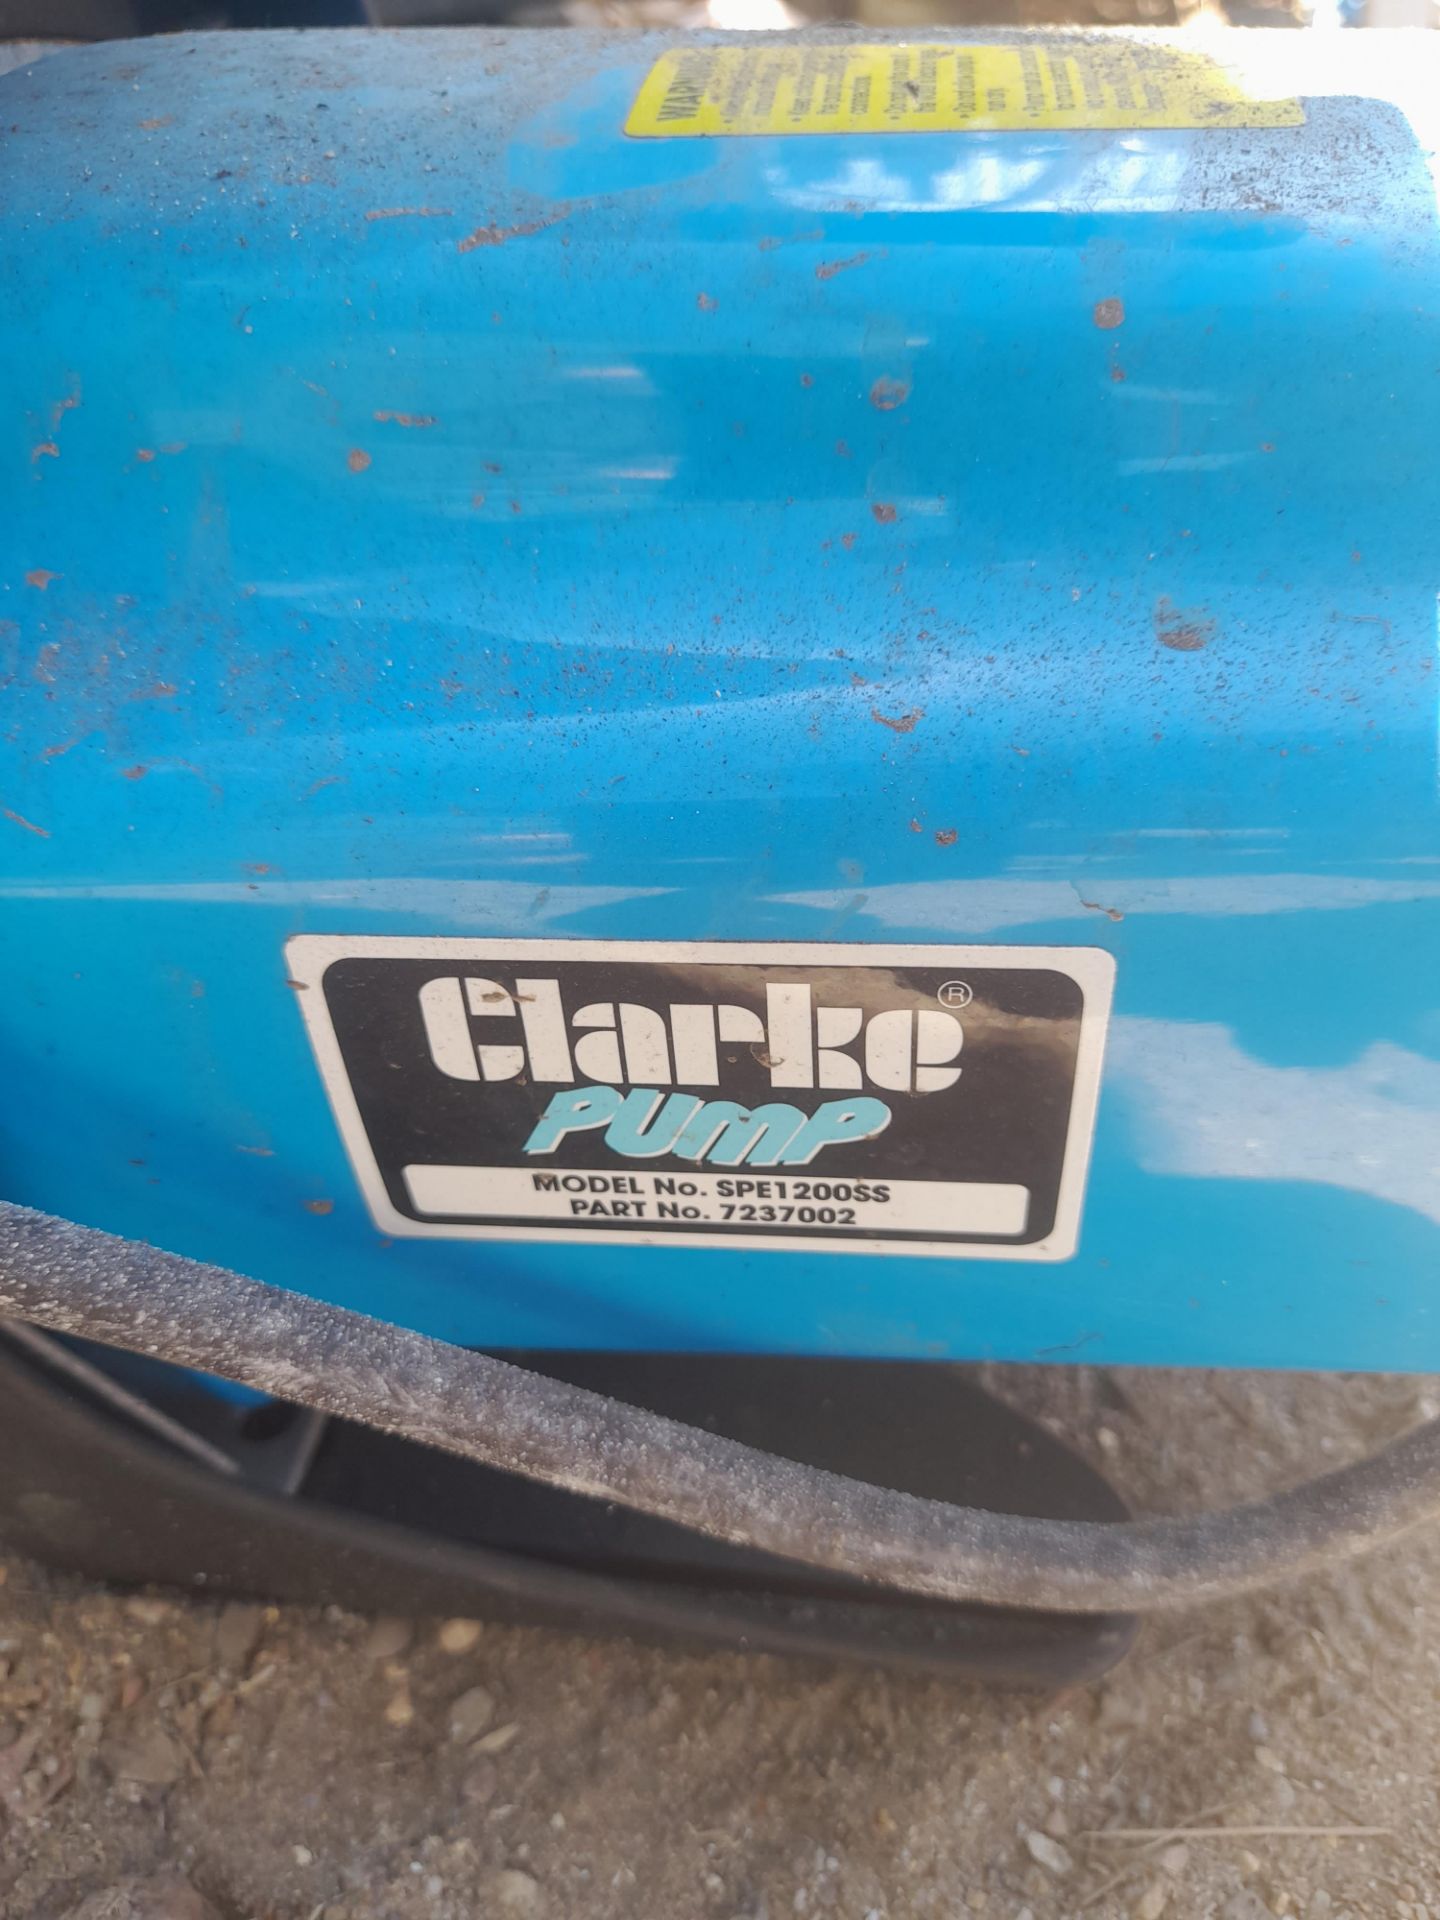 Clarke SPE 1200SS 1in Self Priming Stainless Steel Pump 240v, Serial Number 0274 - Image 2 of 4